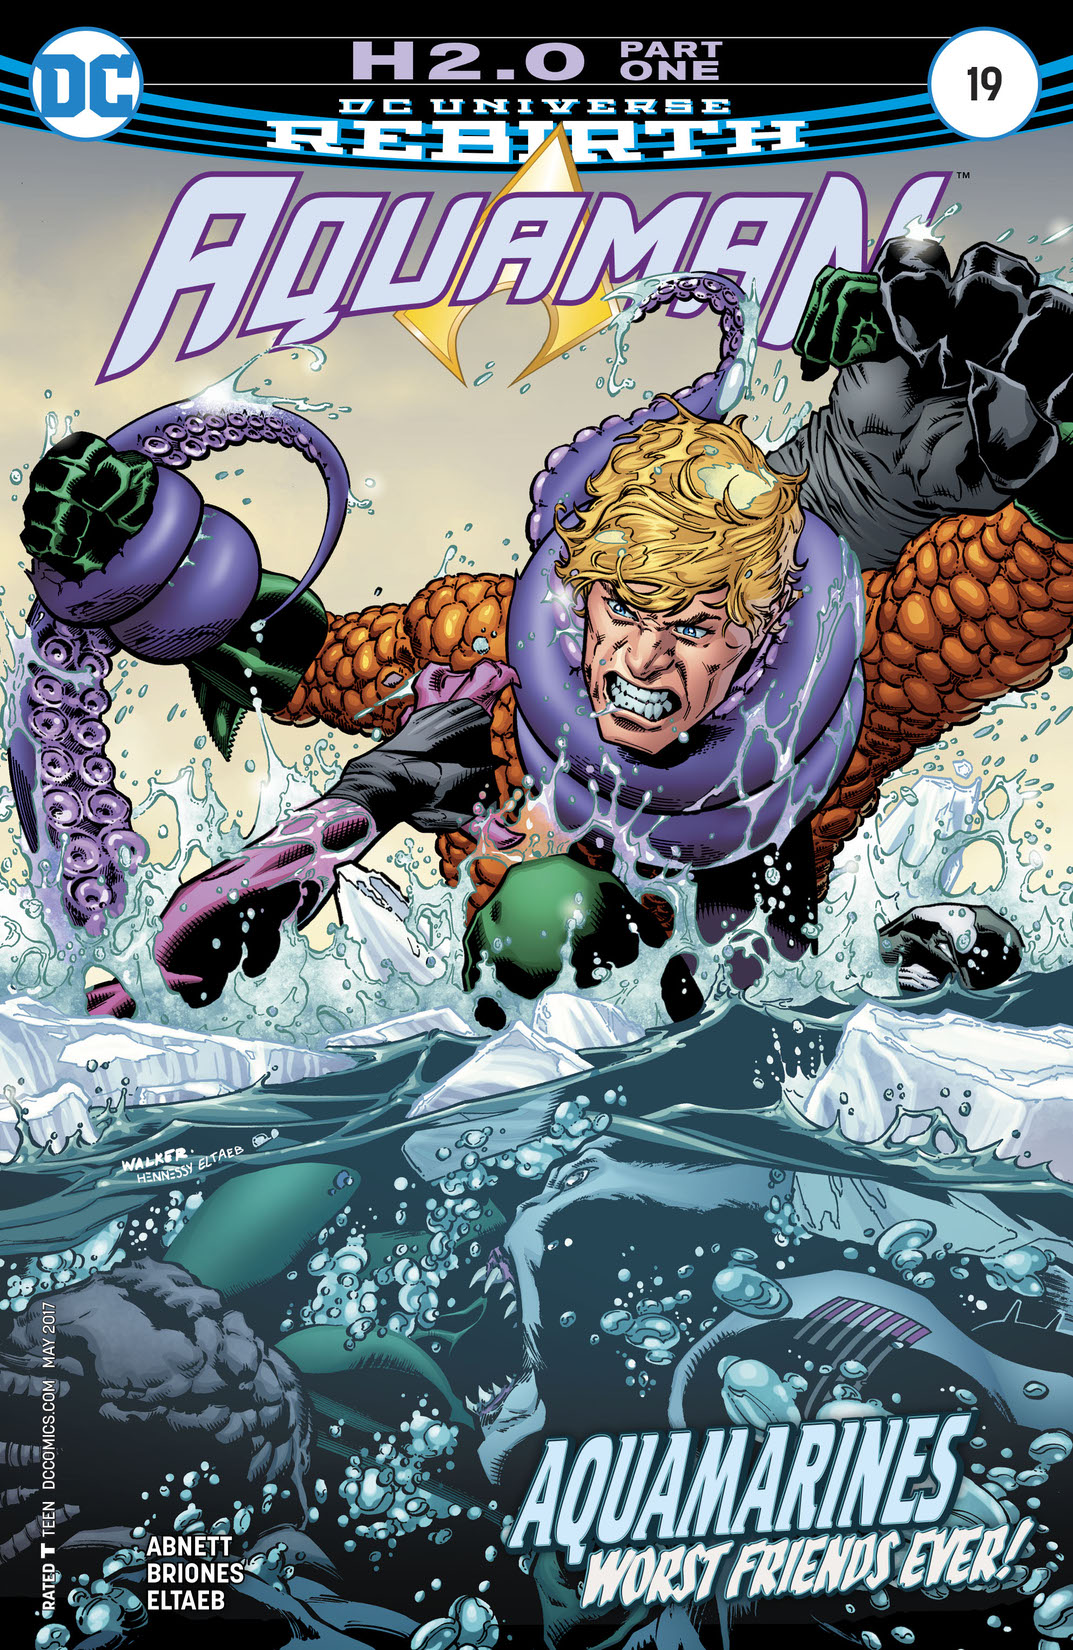 Aquaman (2016-) #19 preview images